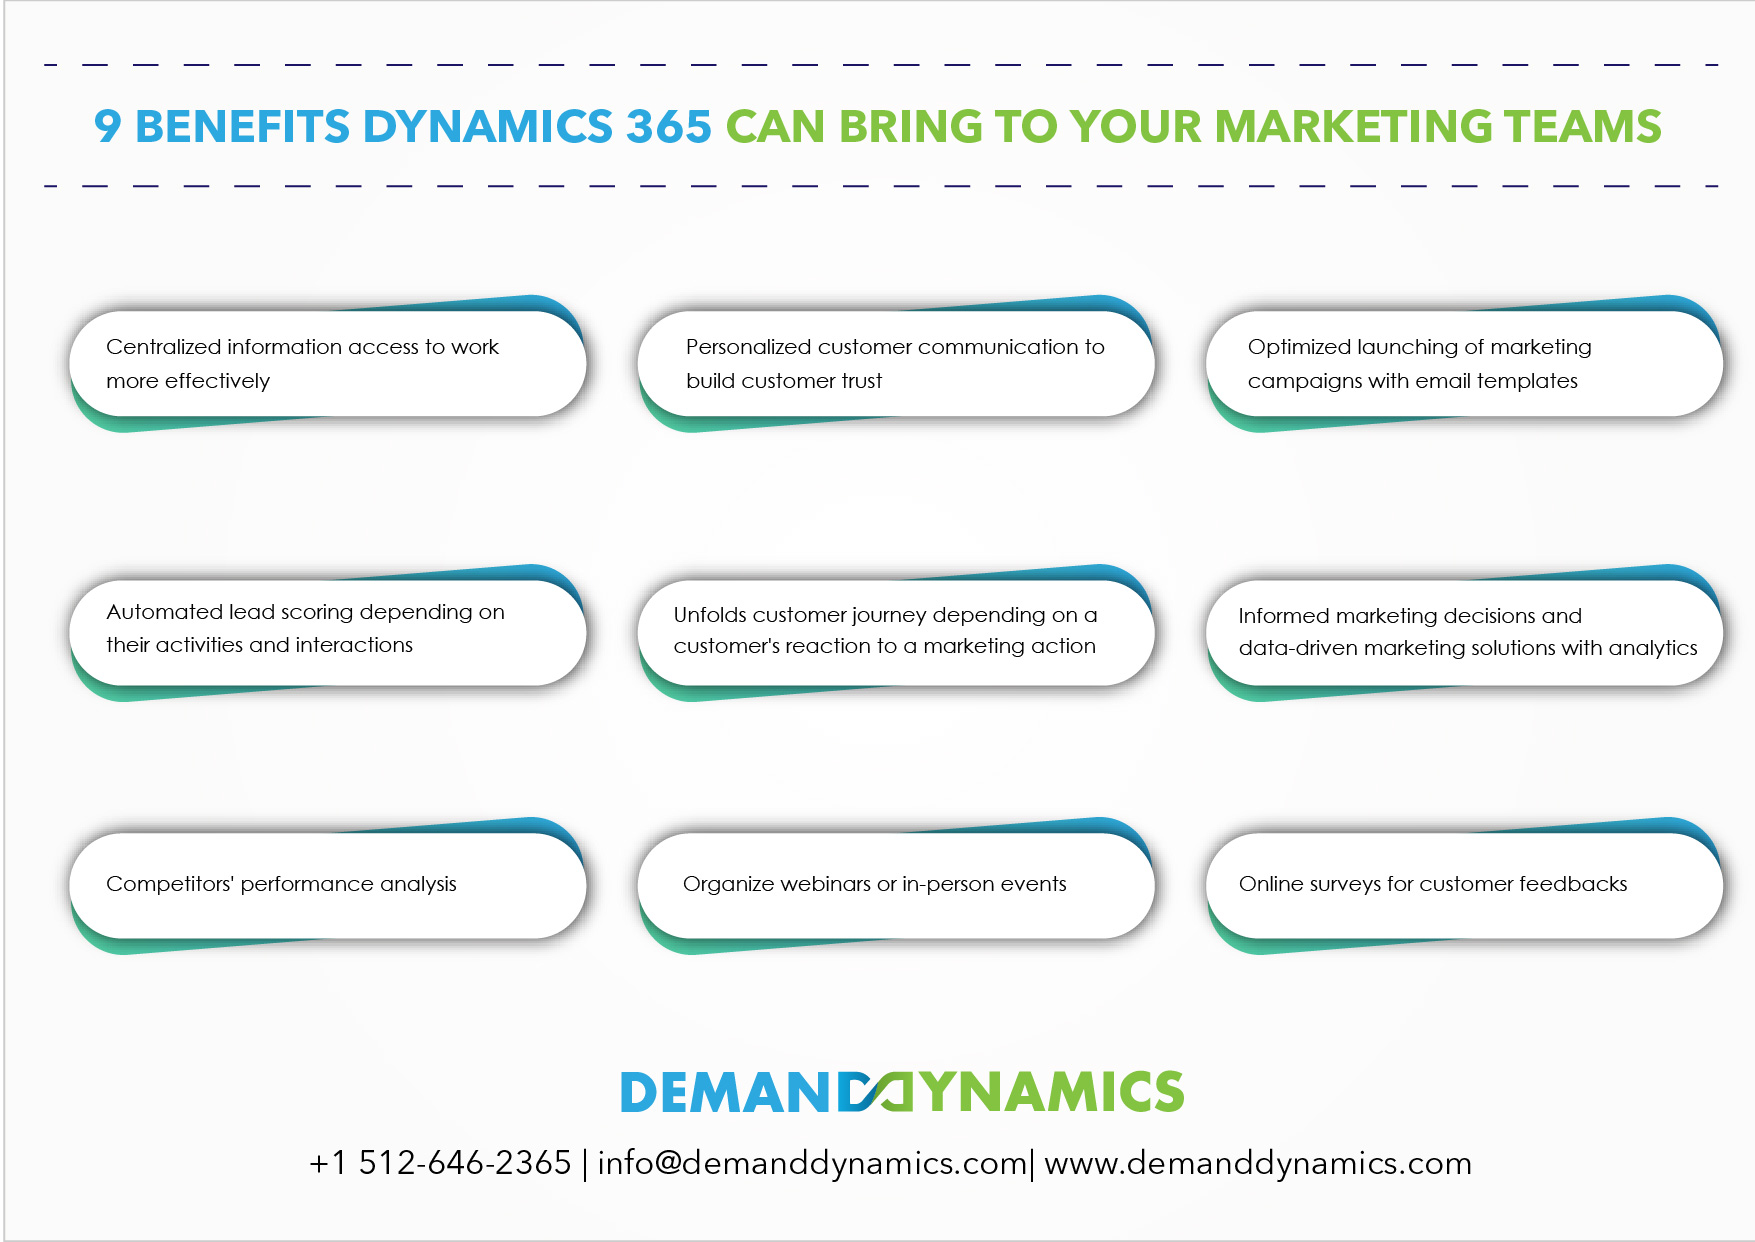 Dynamics 365 for Marketing teams